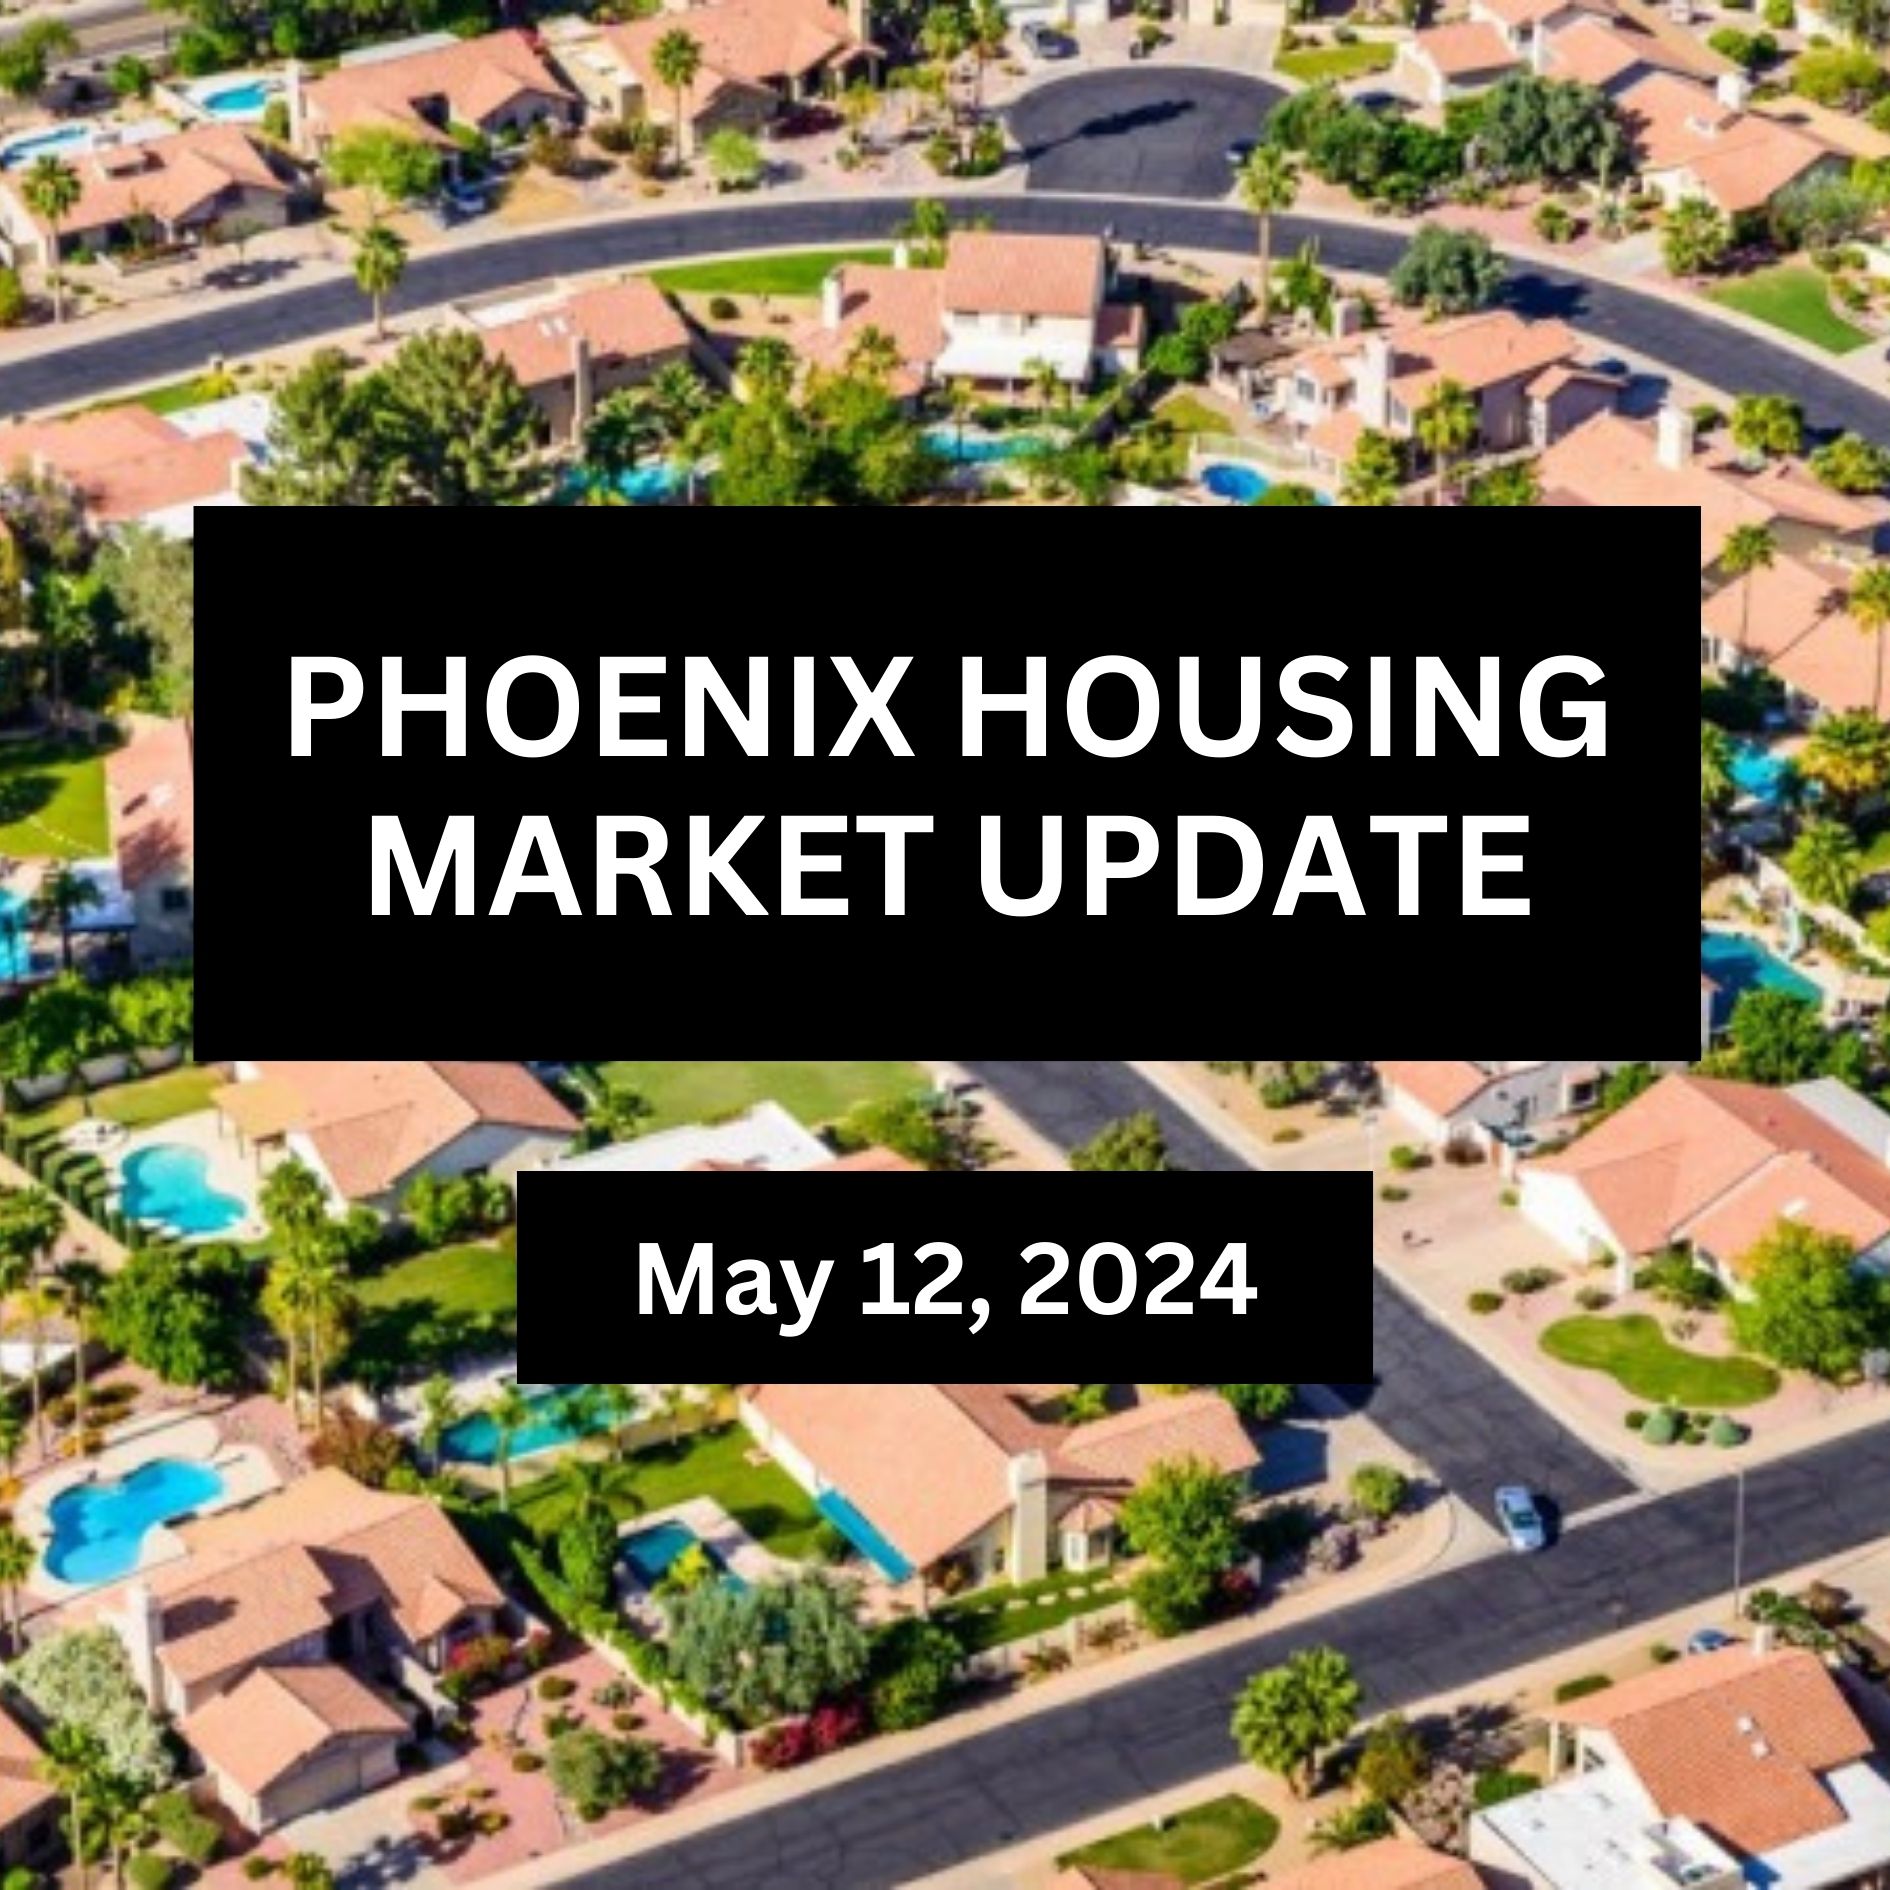 Phoenix housing market update